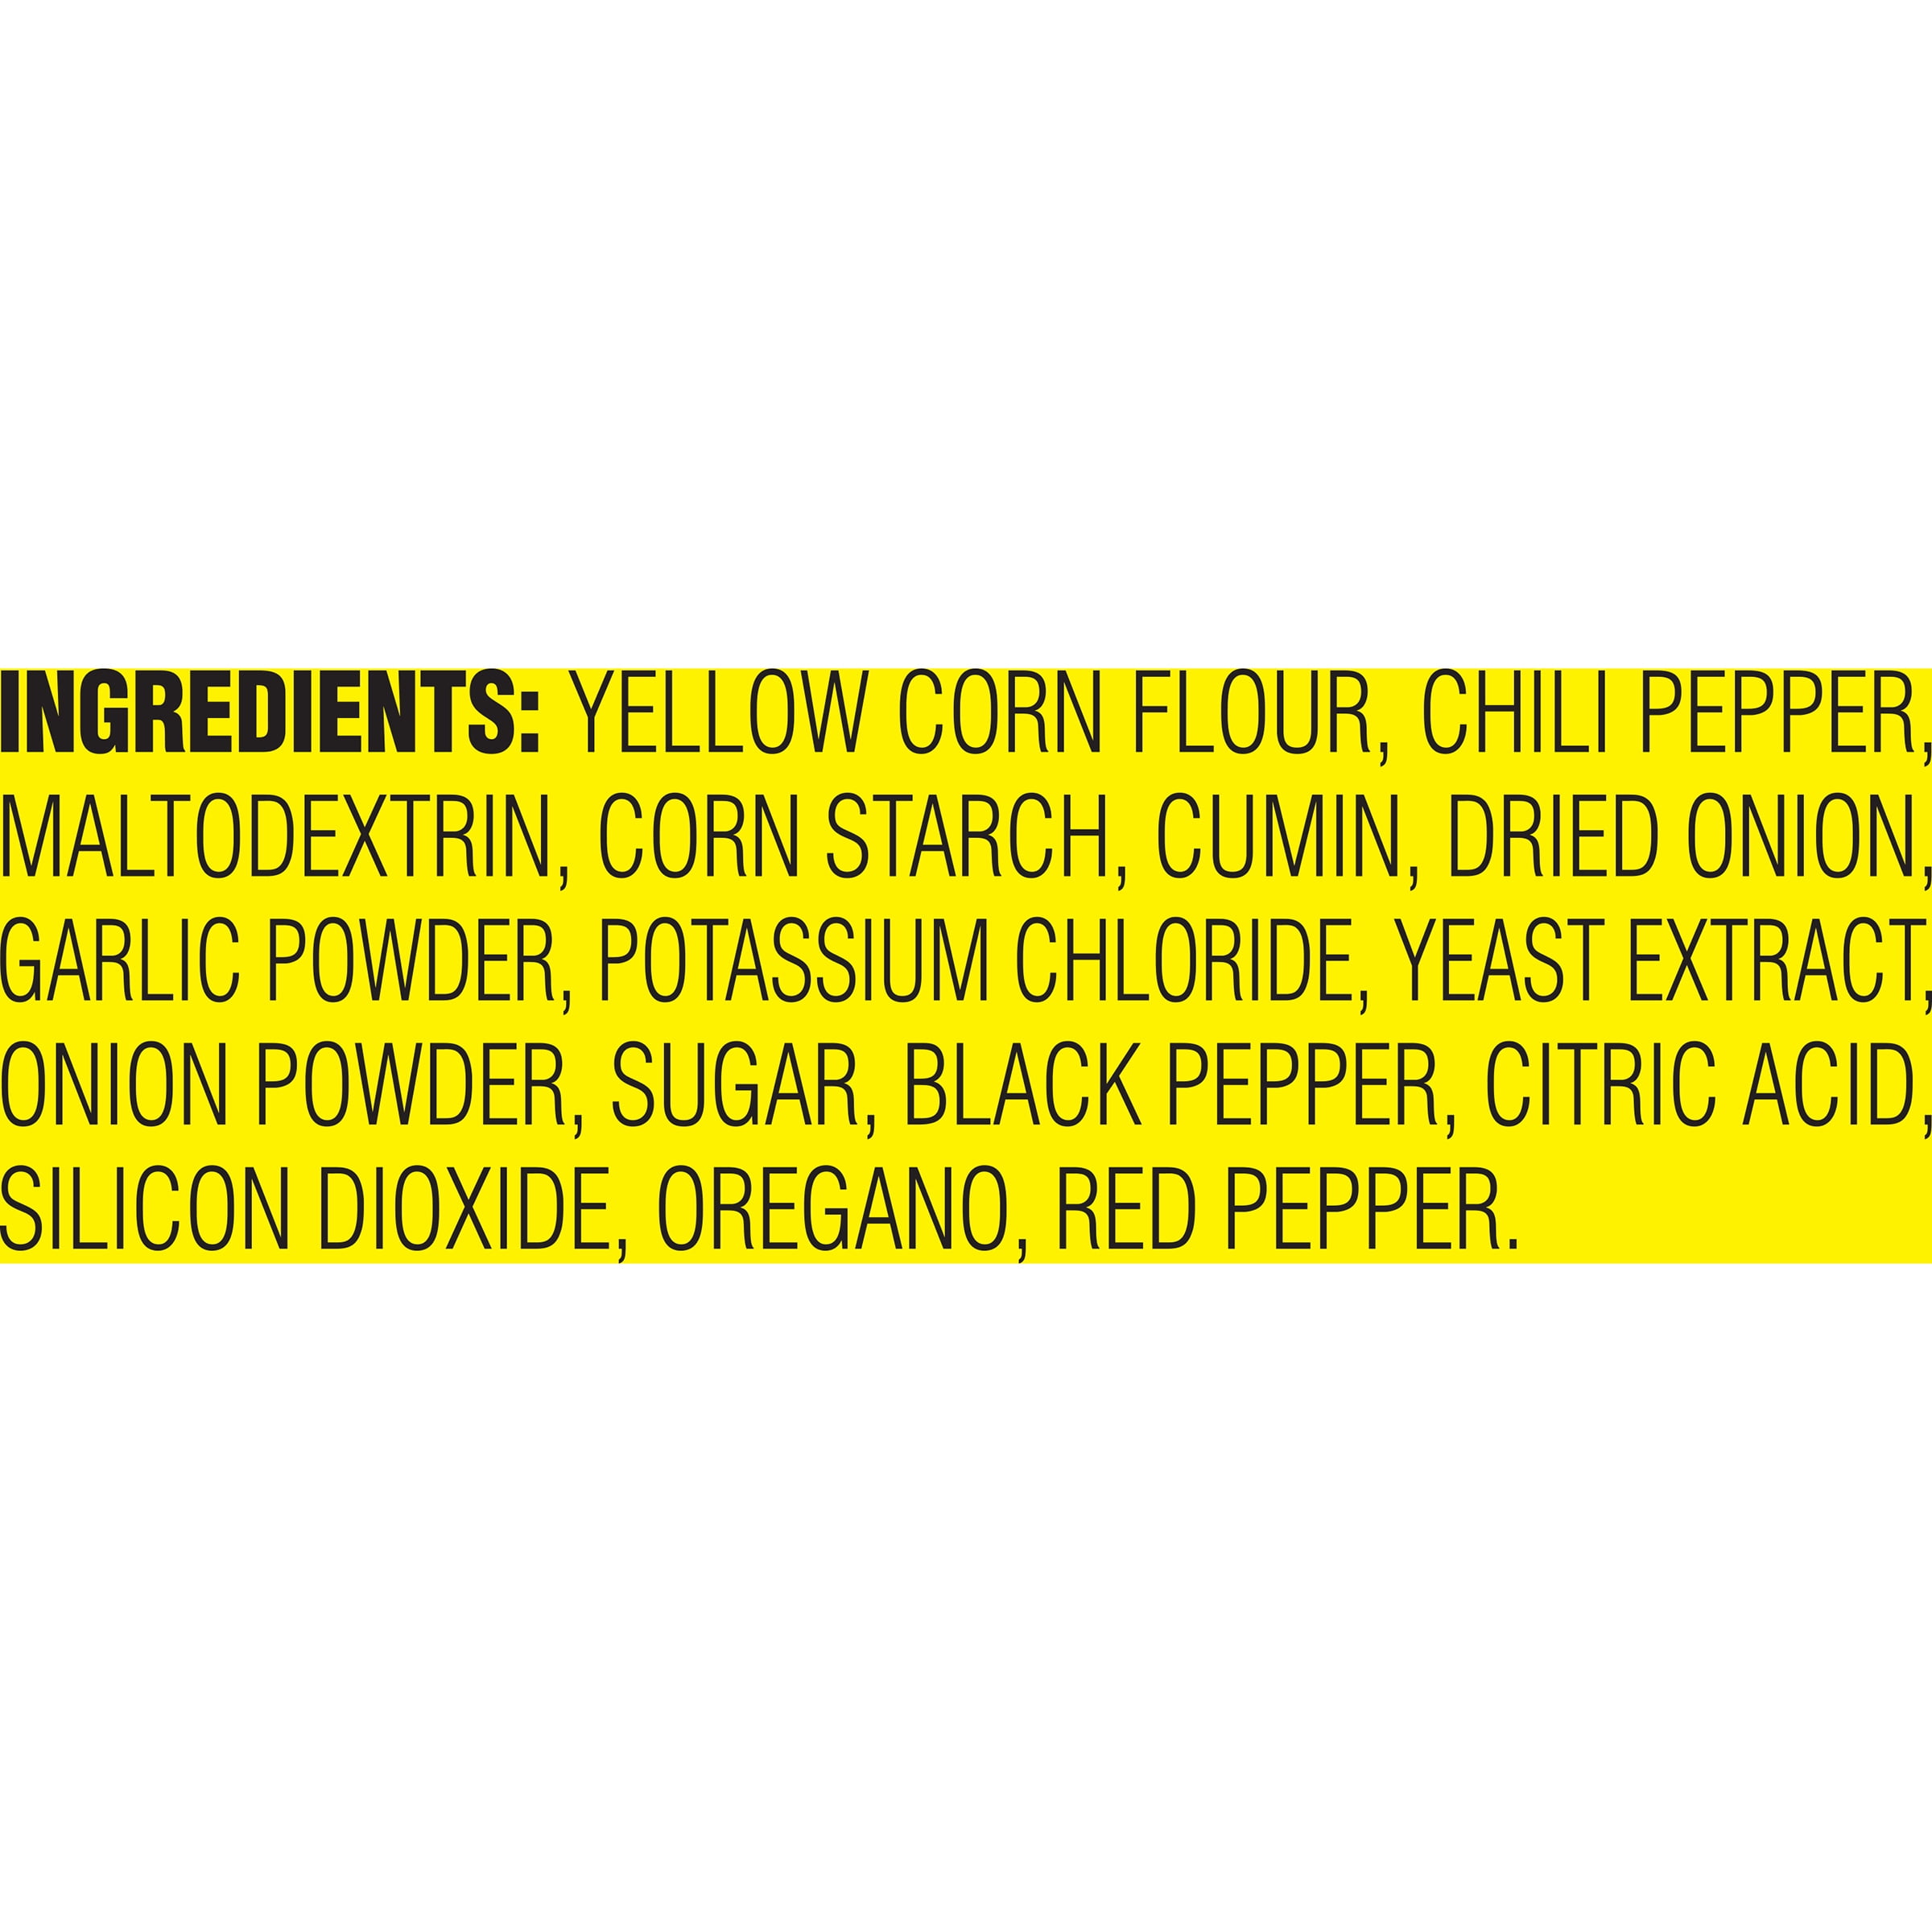 Mrs. Dash Seasoning Mix Salt-Free All Natural Taco Mrs Dash(605021001014):  customers reviews @